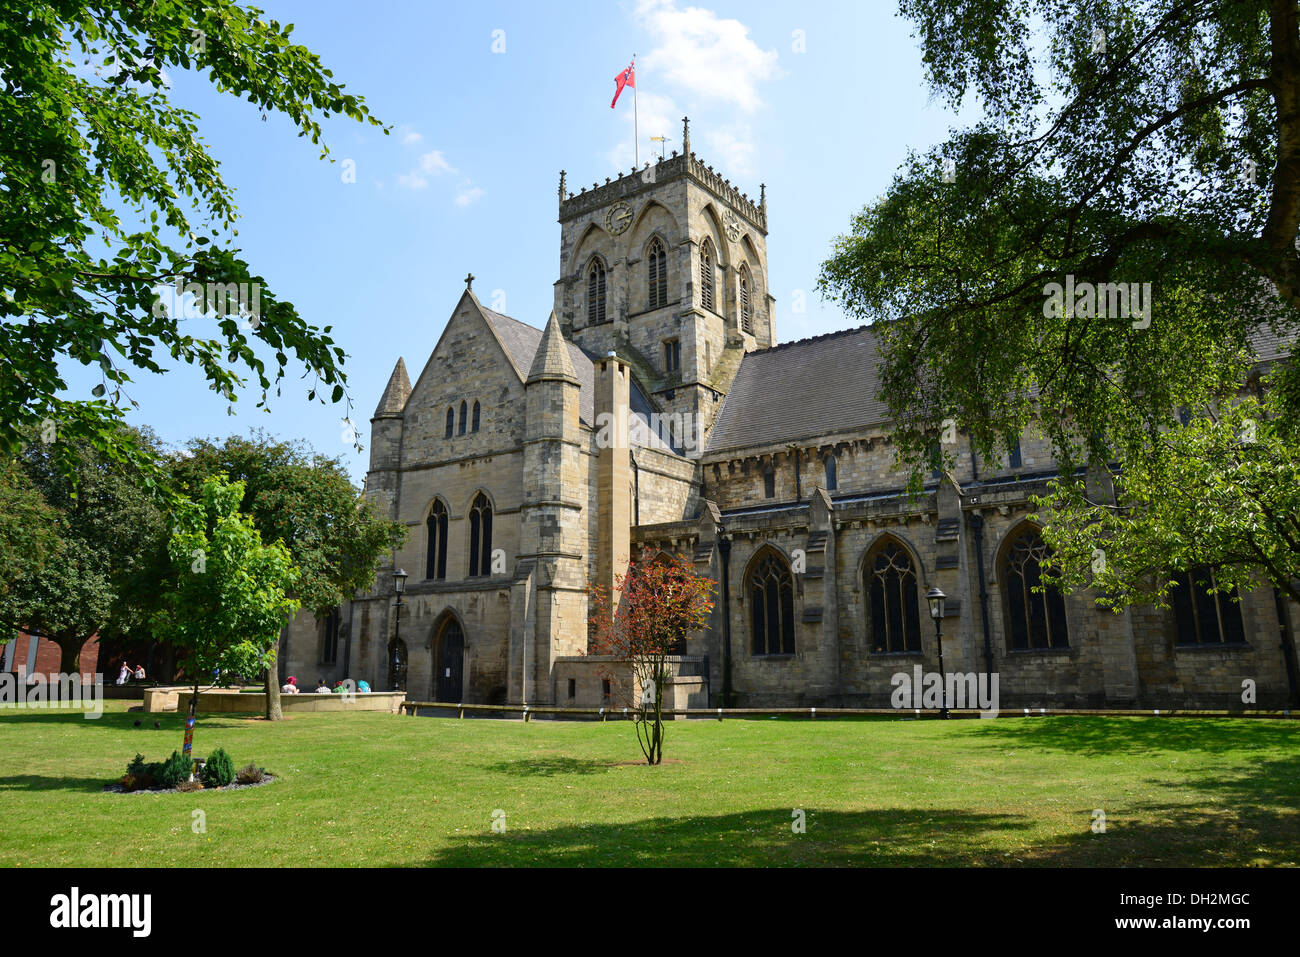 St James' Church, St James' Square, Grimsby, Lincolnshire, England, United Kingdom Stock Photo